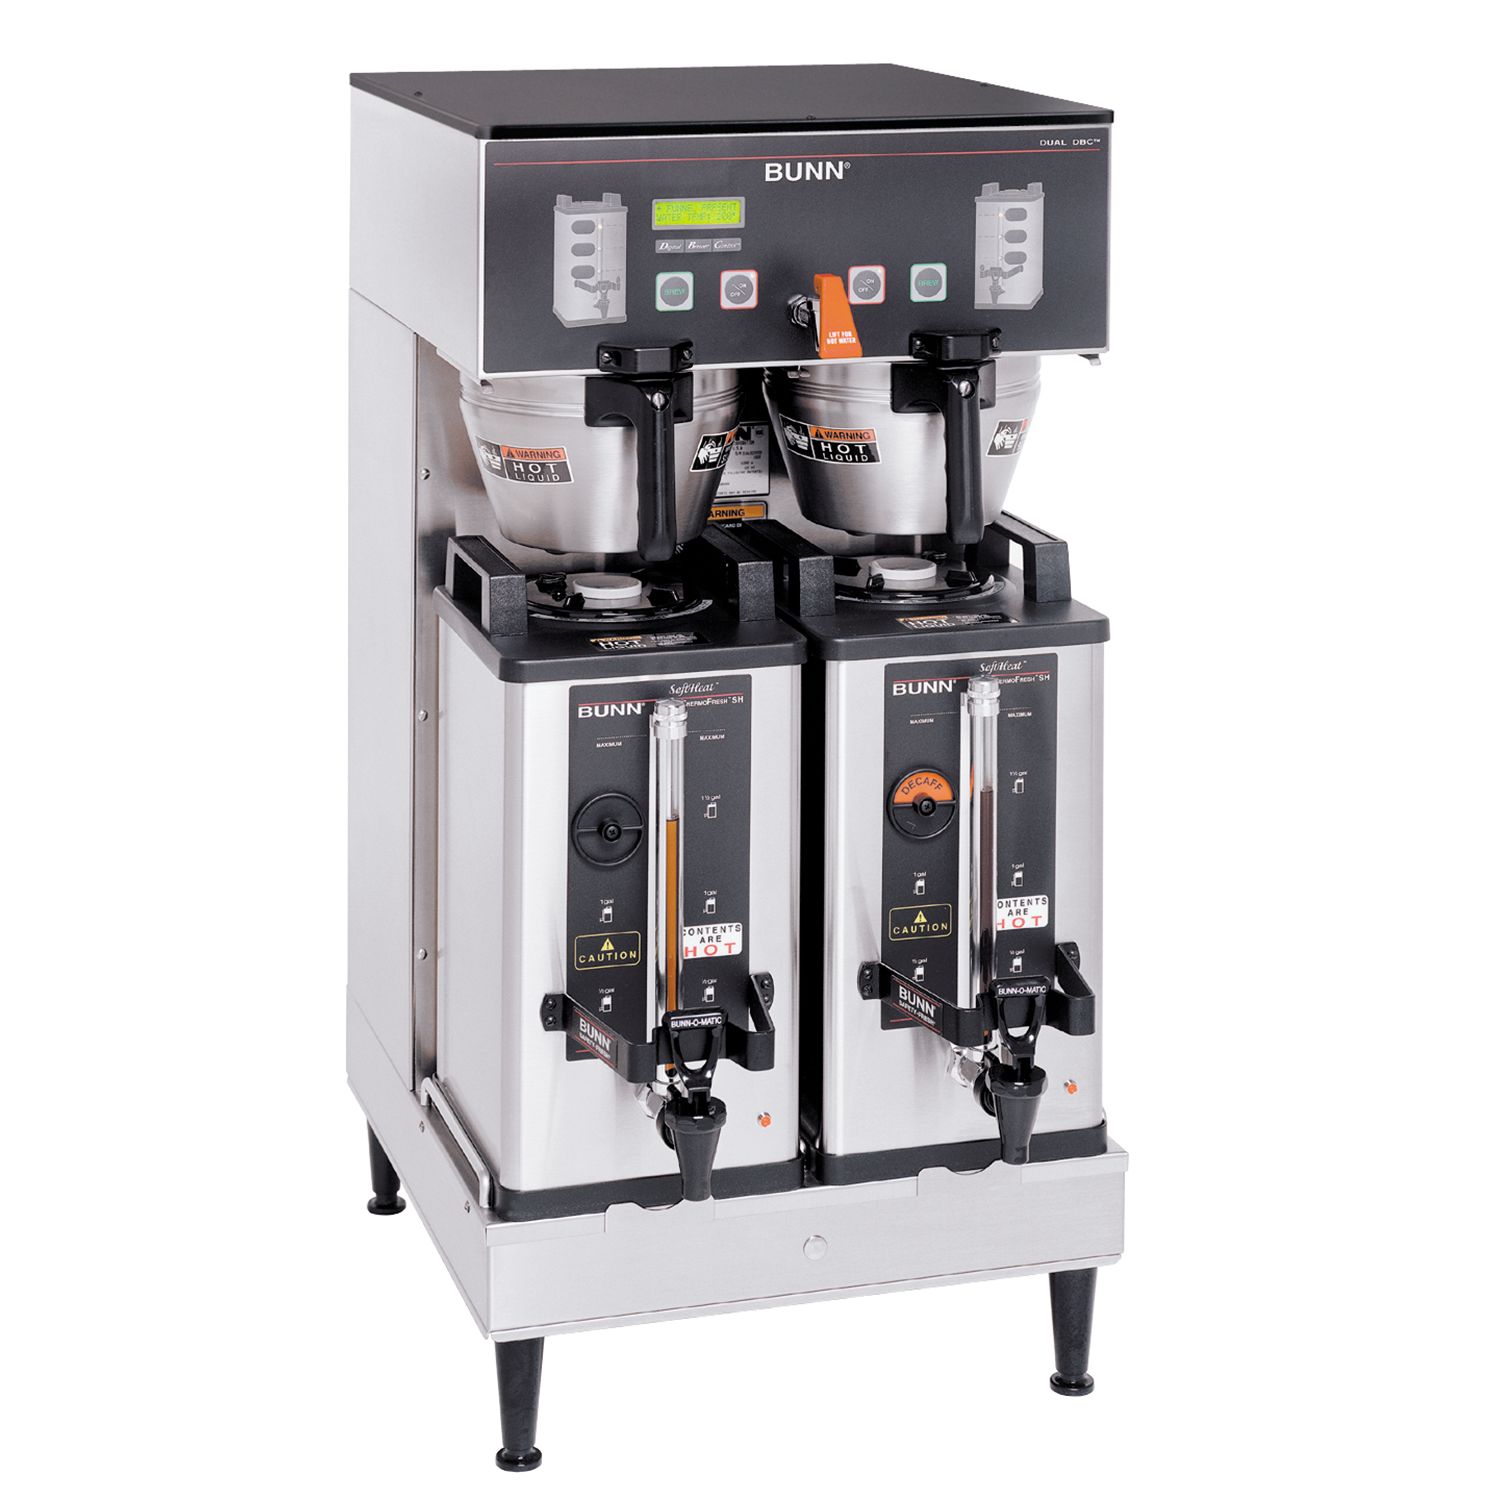 BUNN DUAL SH DBC Commercial Coffee Brewer 2015 Model server 33500